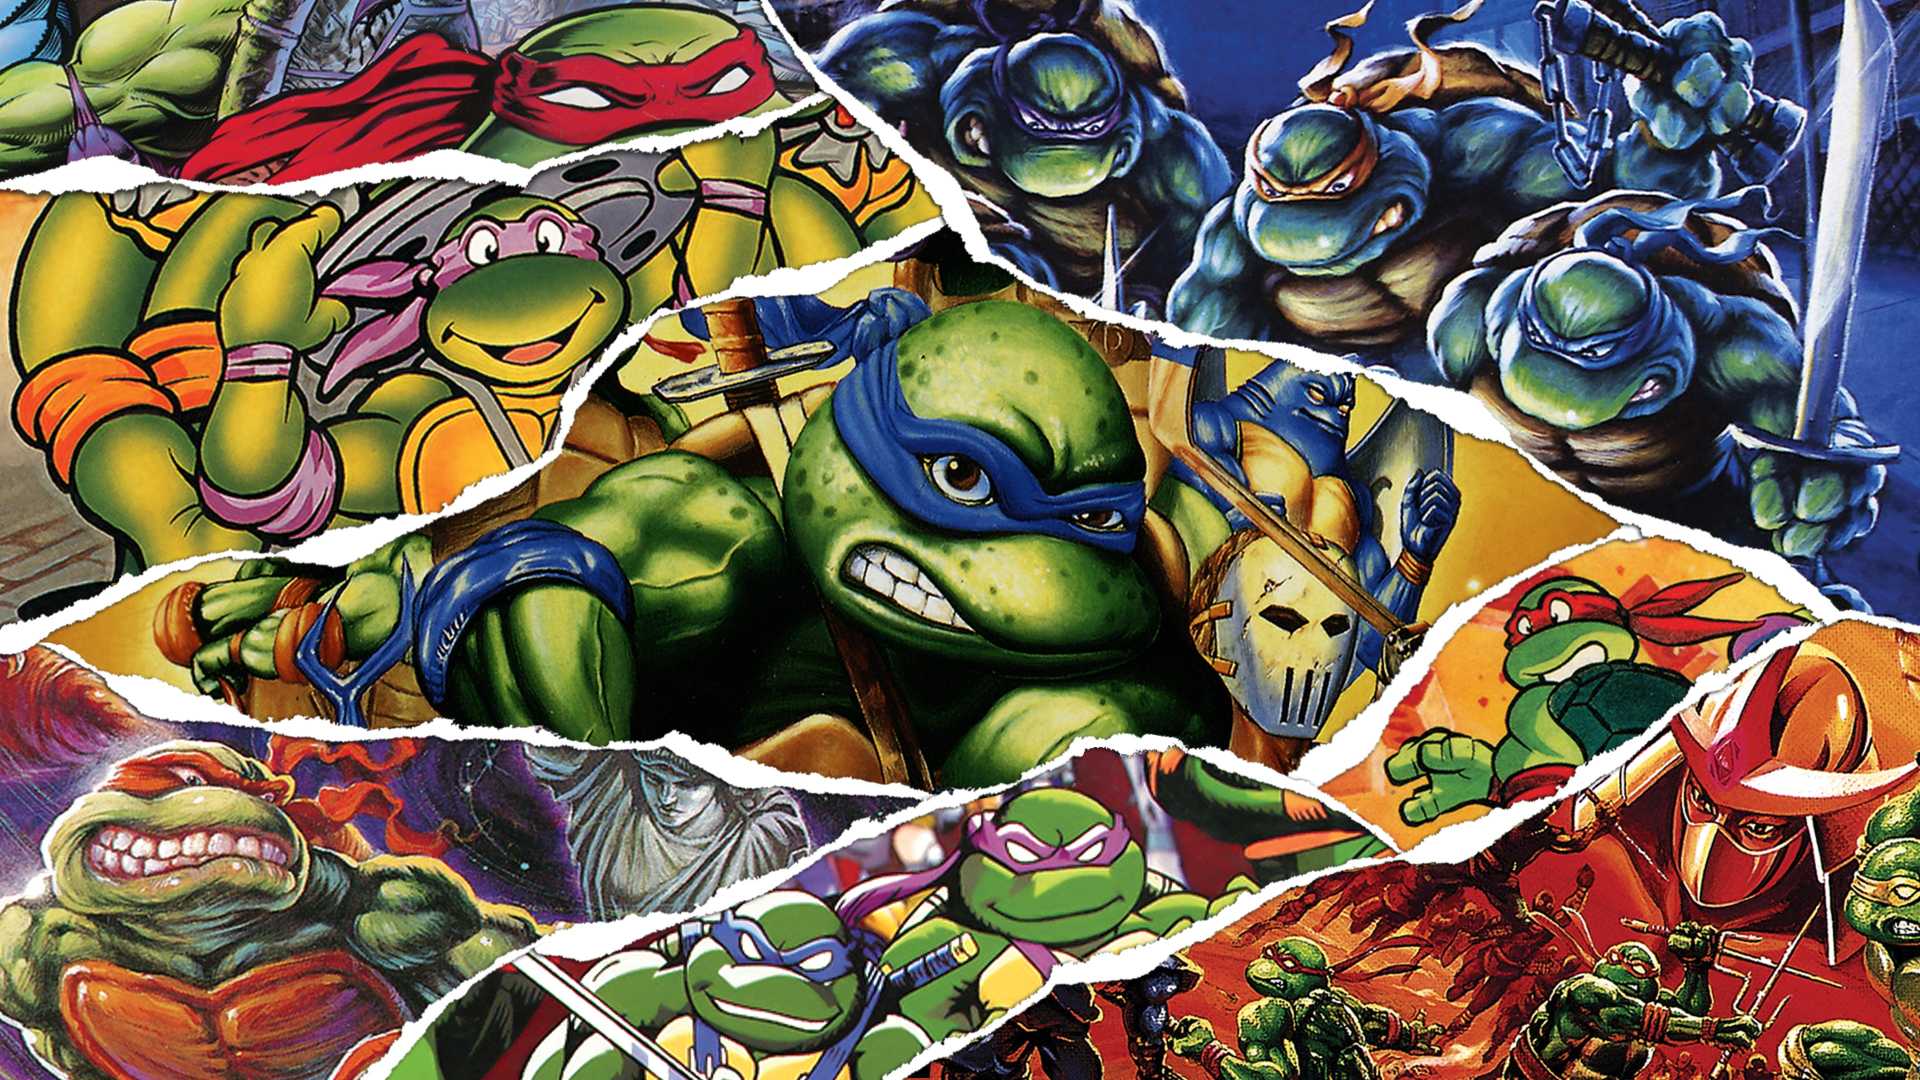 Turtles collections. Teenage Mutant Ninja Turtles иксбокс. Черепашки ниндзя 2020. Шредер черепахи. Черепашки ниндзя Джоджо.